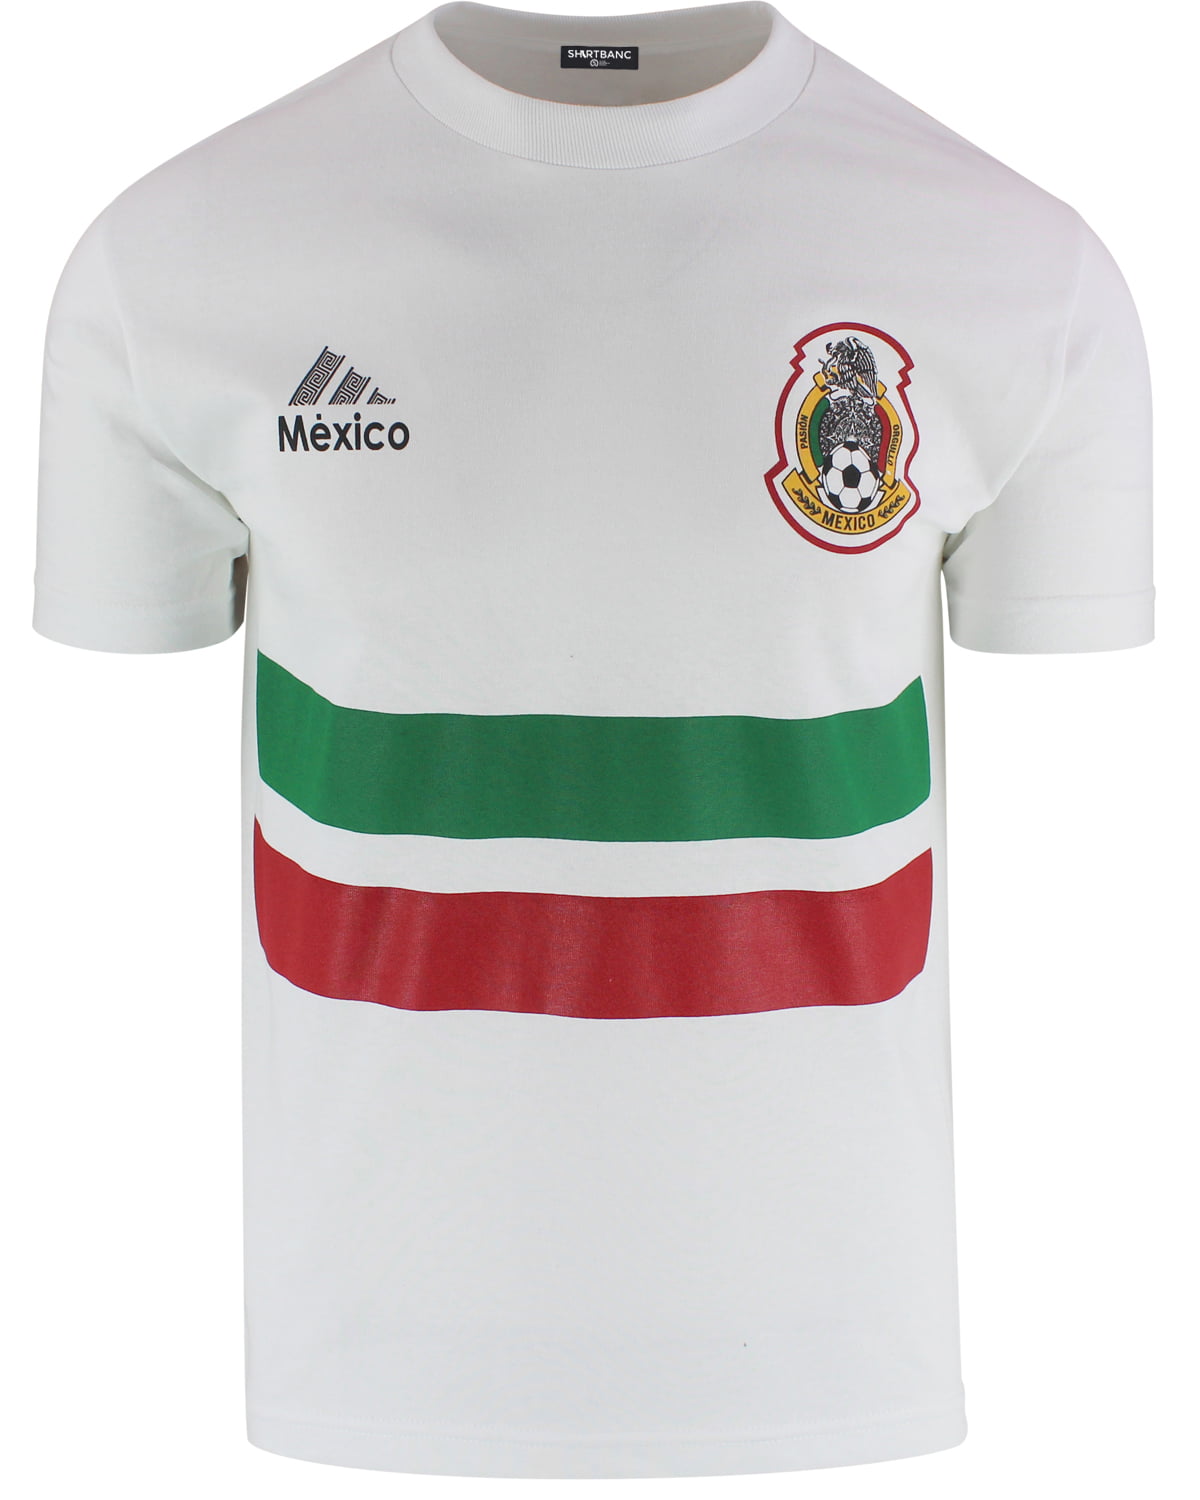 ShirtBANC Mexico Soccer Jersey T Shirt Futbol Mexicano Seleccion Mexicana - Walmart.com